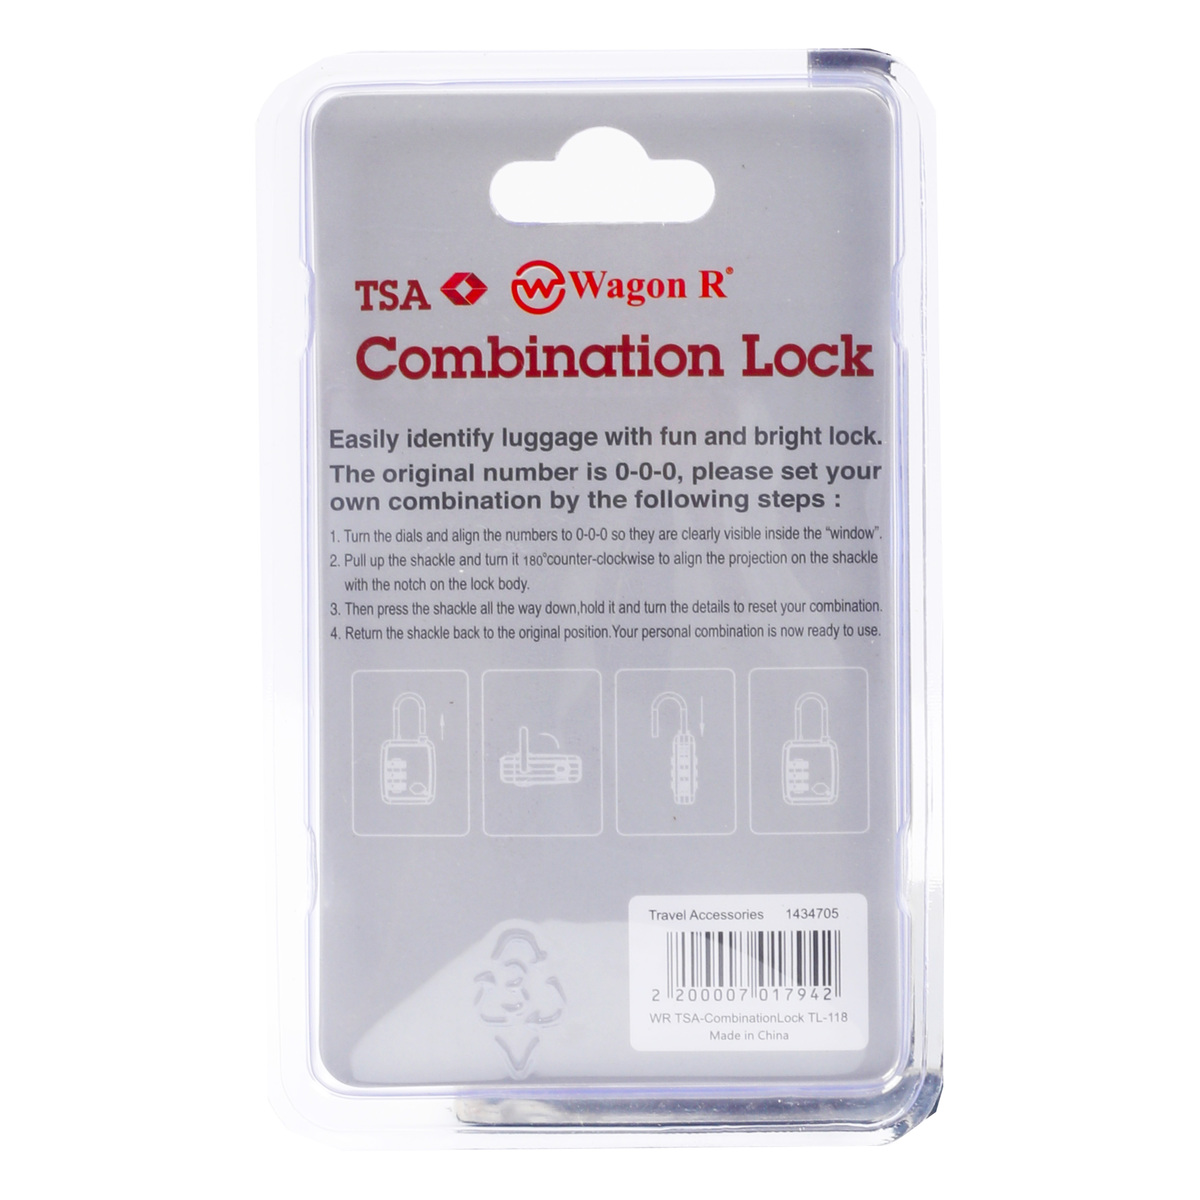 Wagon R TSA Combination Lock TL-118